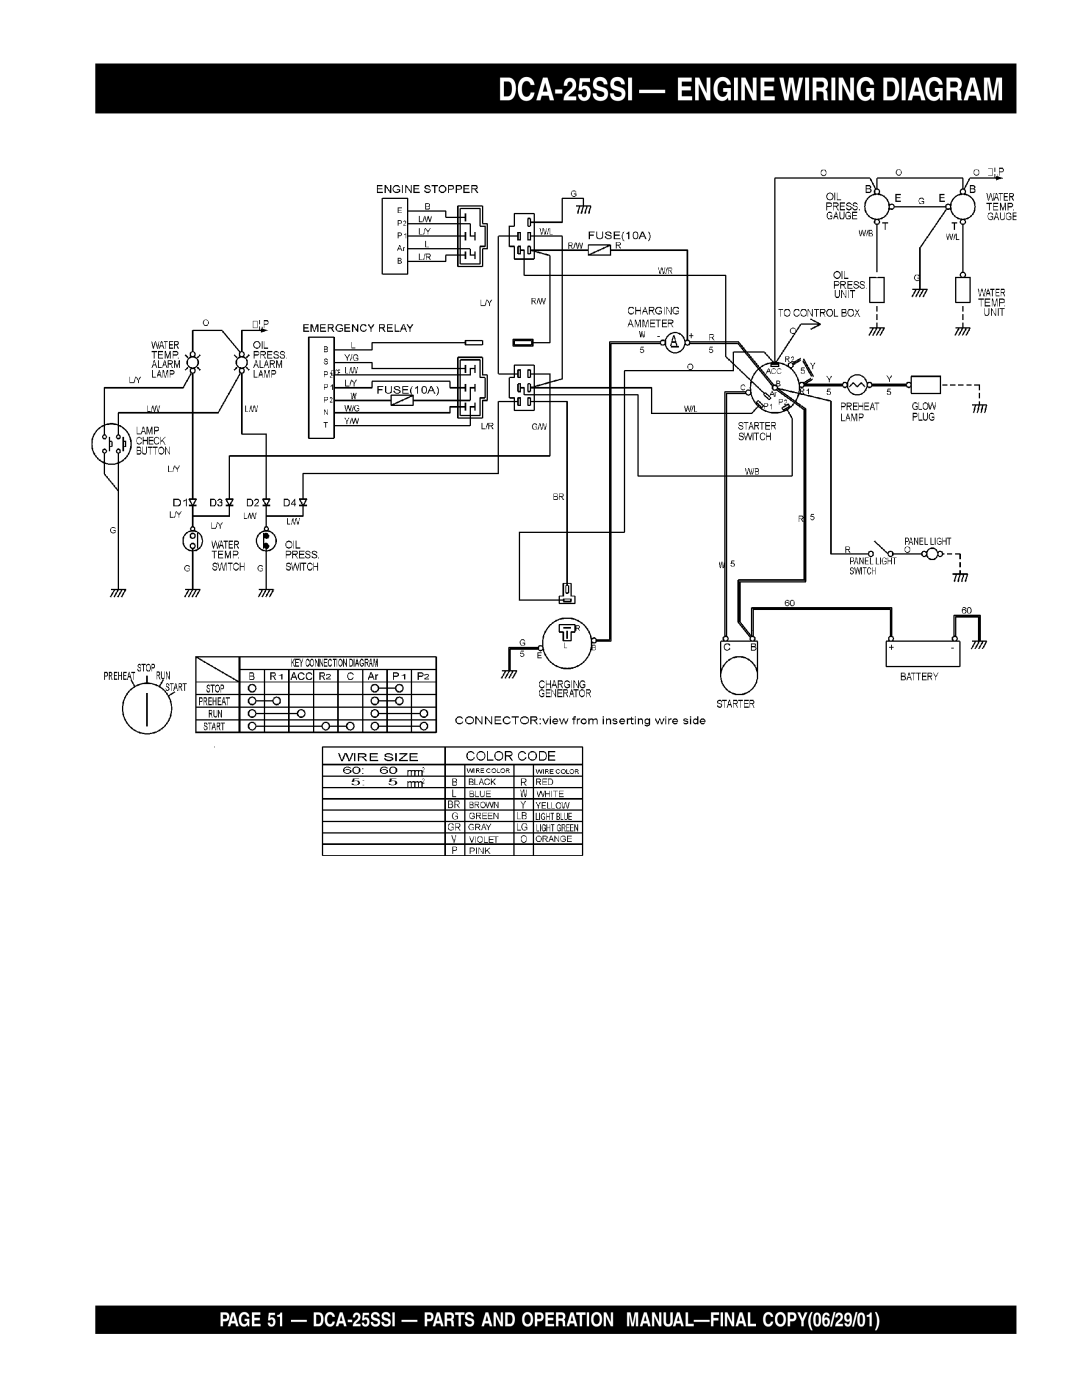 Multiquip operation manual DCA-25SSI— ENGINE WIRING DIAGRAM 